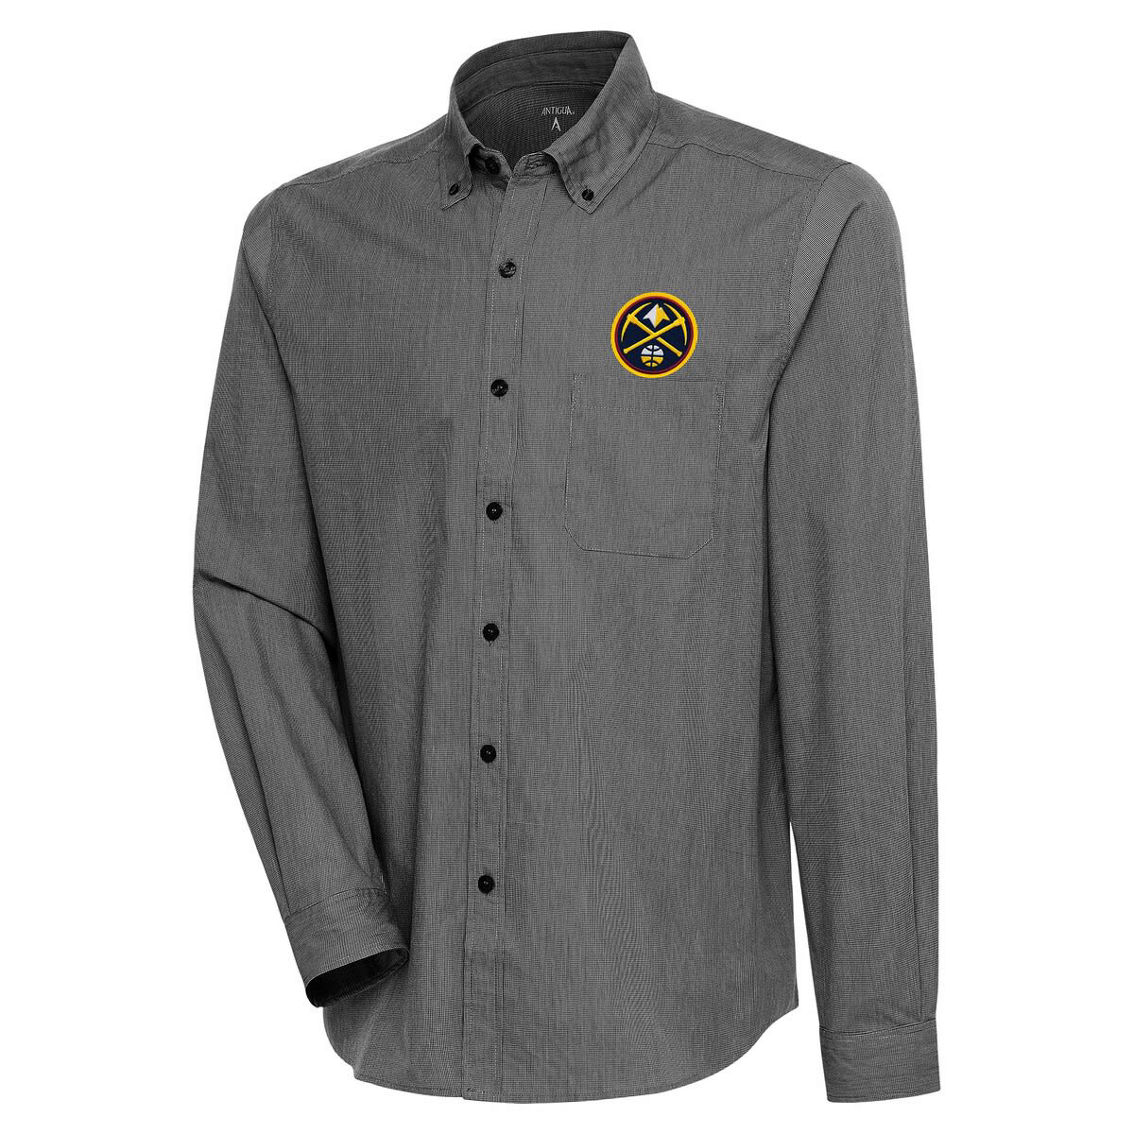 Antigua Men's Black Denver Nuggets Compression Button-Down Shirt - Image 2 of 2